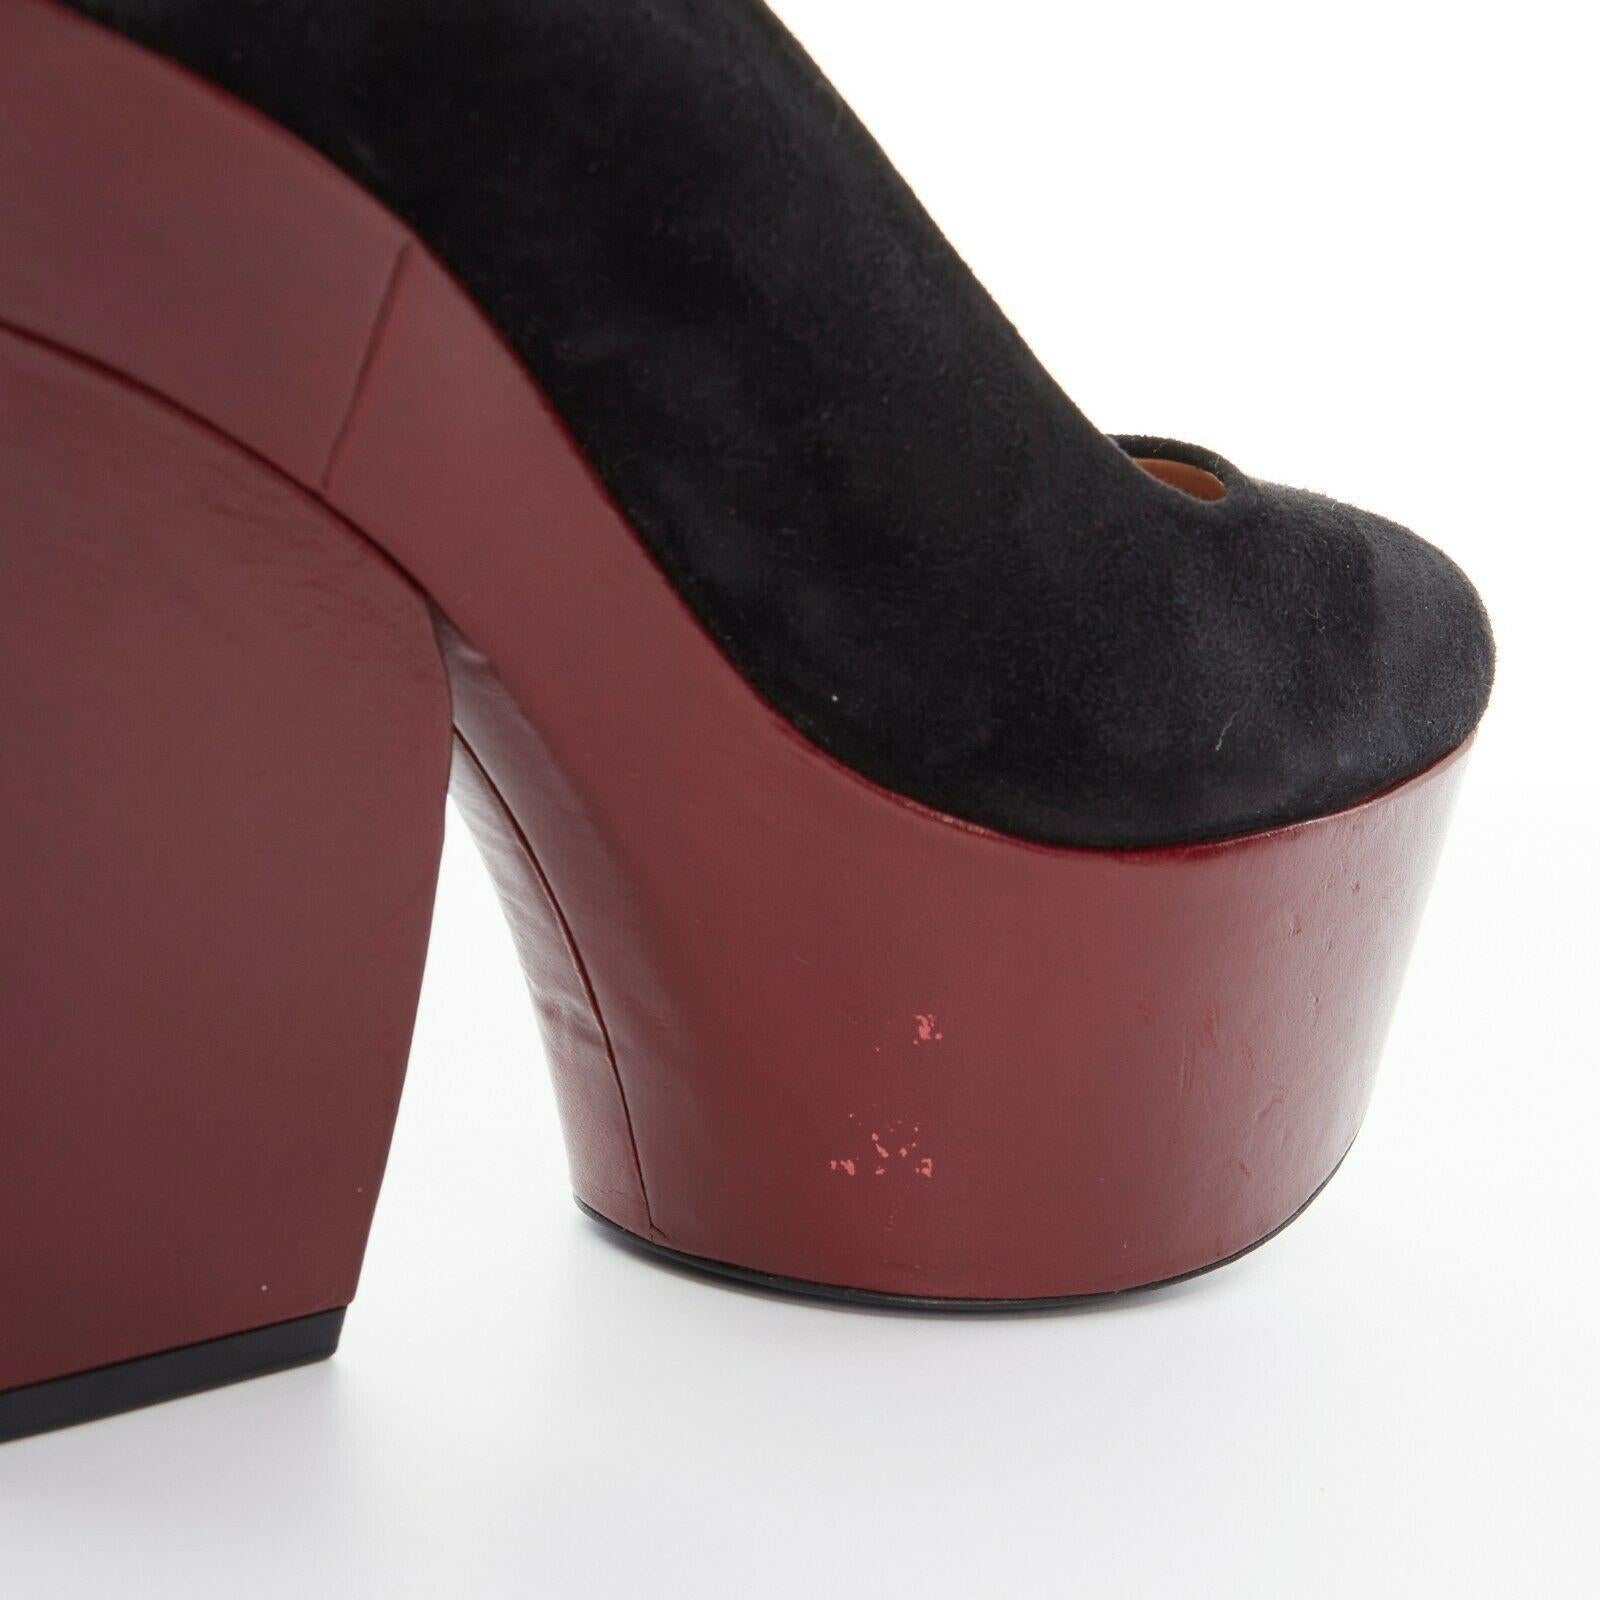 Women's CELINE PHOEBE PHILO black suede red platform wedge wide ankle cuff heels EU38.5